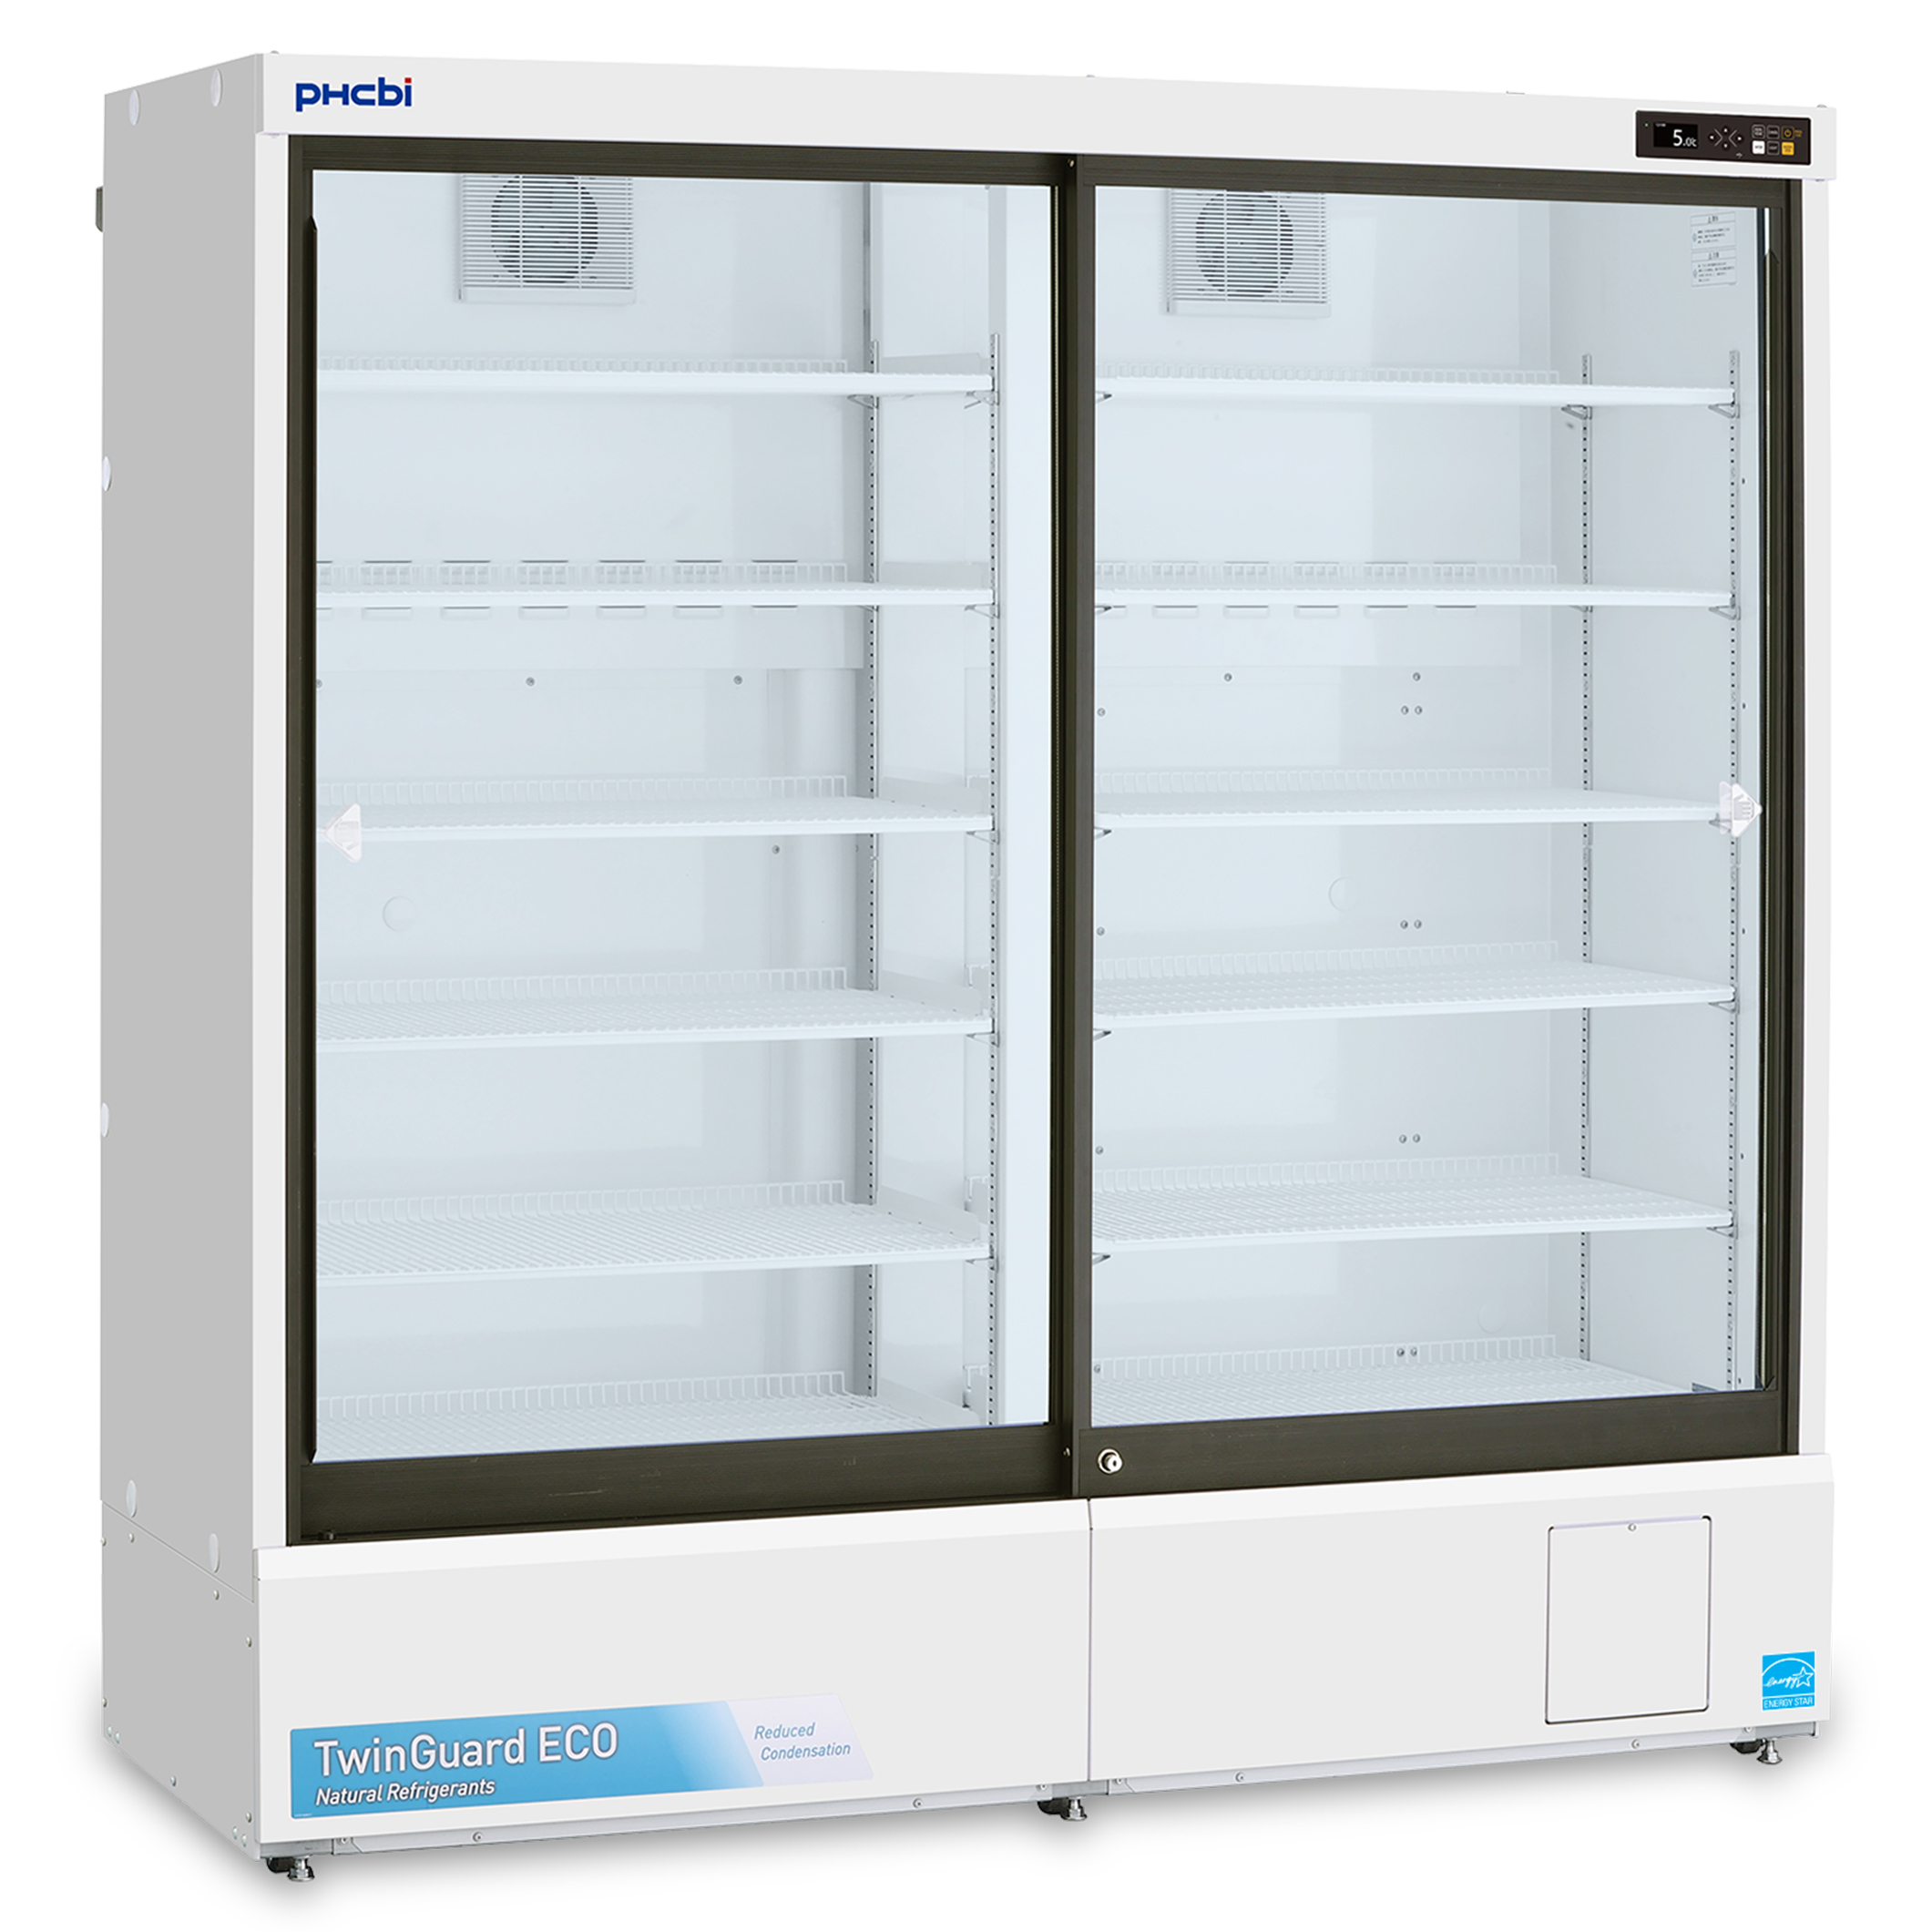 Energy Star certified vaccine storage refrigerator MPR-1014-PA